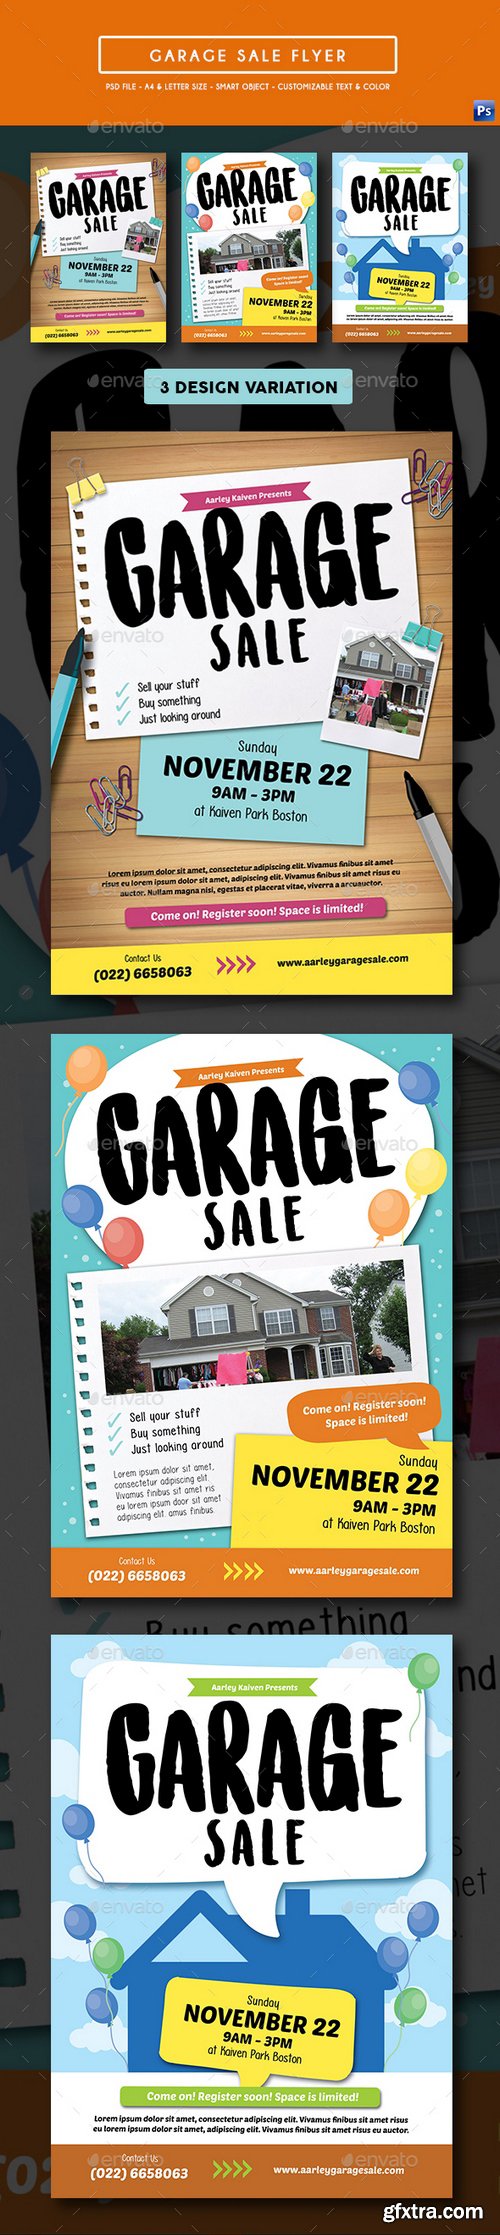 Graphicriver - Garage Sale Flyer 16760868